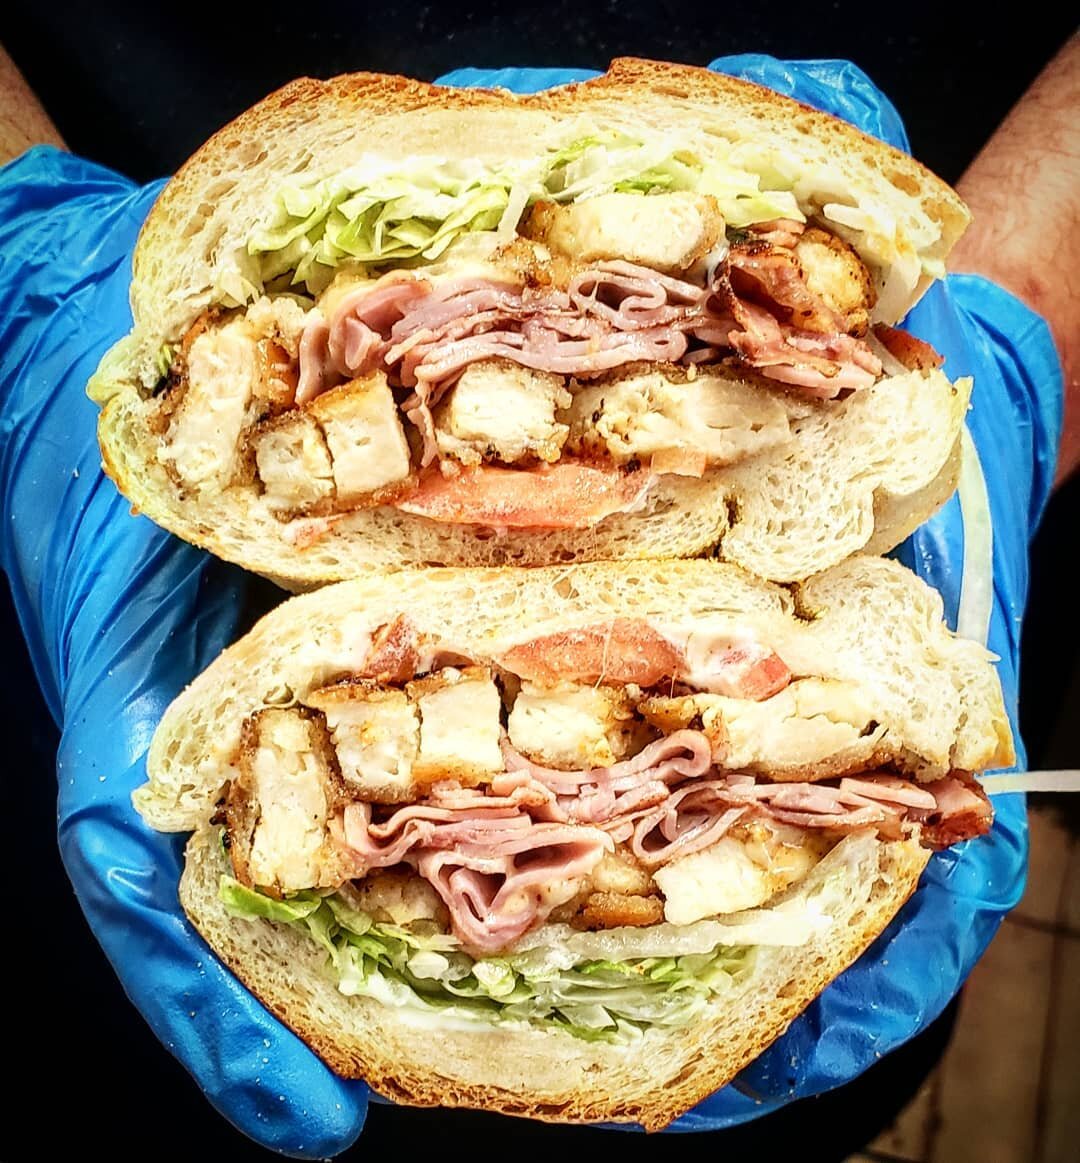 💙 CHICKEN CORDON BLUE 💙
.
Breaded chicken + grilled ham with lettuce, tomato, onion, mayo + Muenster cheese
.
.
.
#chickencordonblue #muenstercheese #sandwiches #sandwich #sandwichideas #sandwichporn #sandwichesofig #sandwichesofinstagram #sandwich